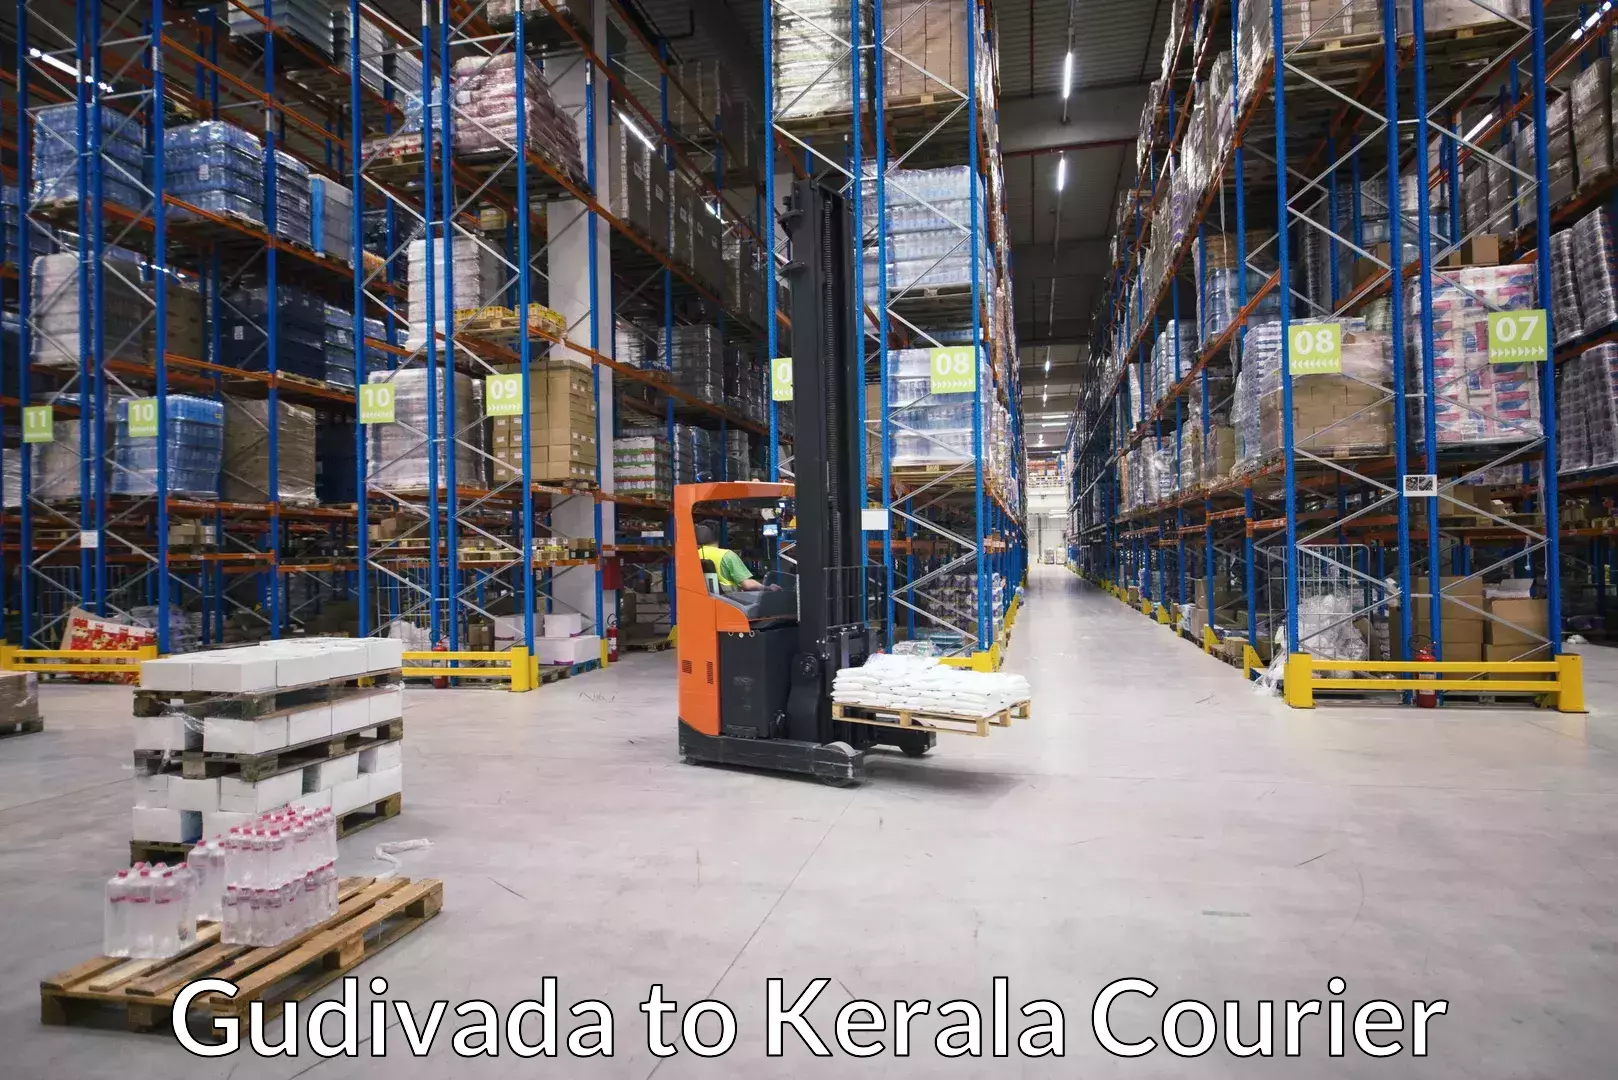 Quality moving company Gudivada to Kerala